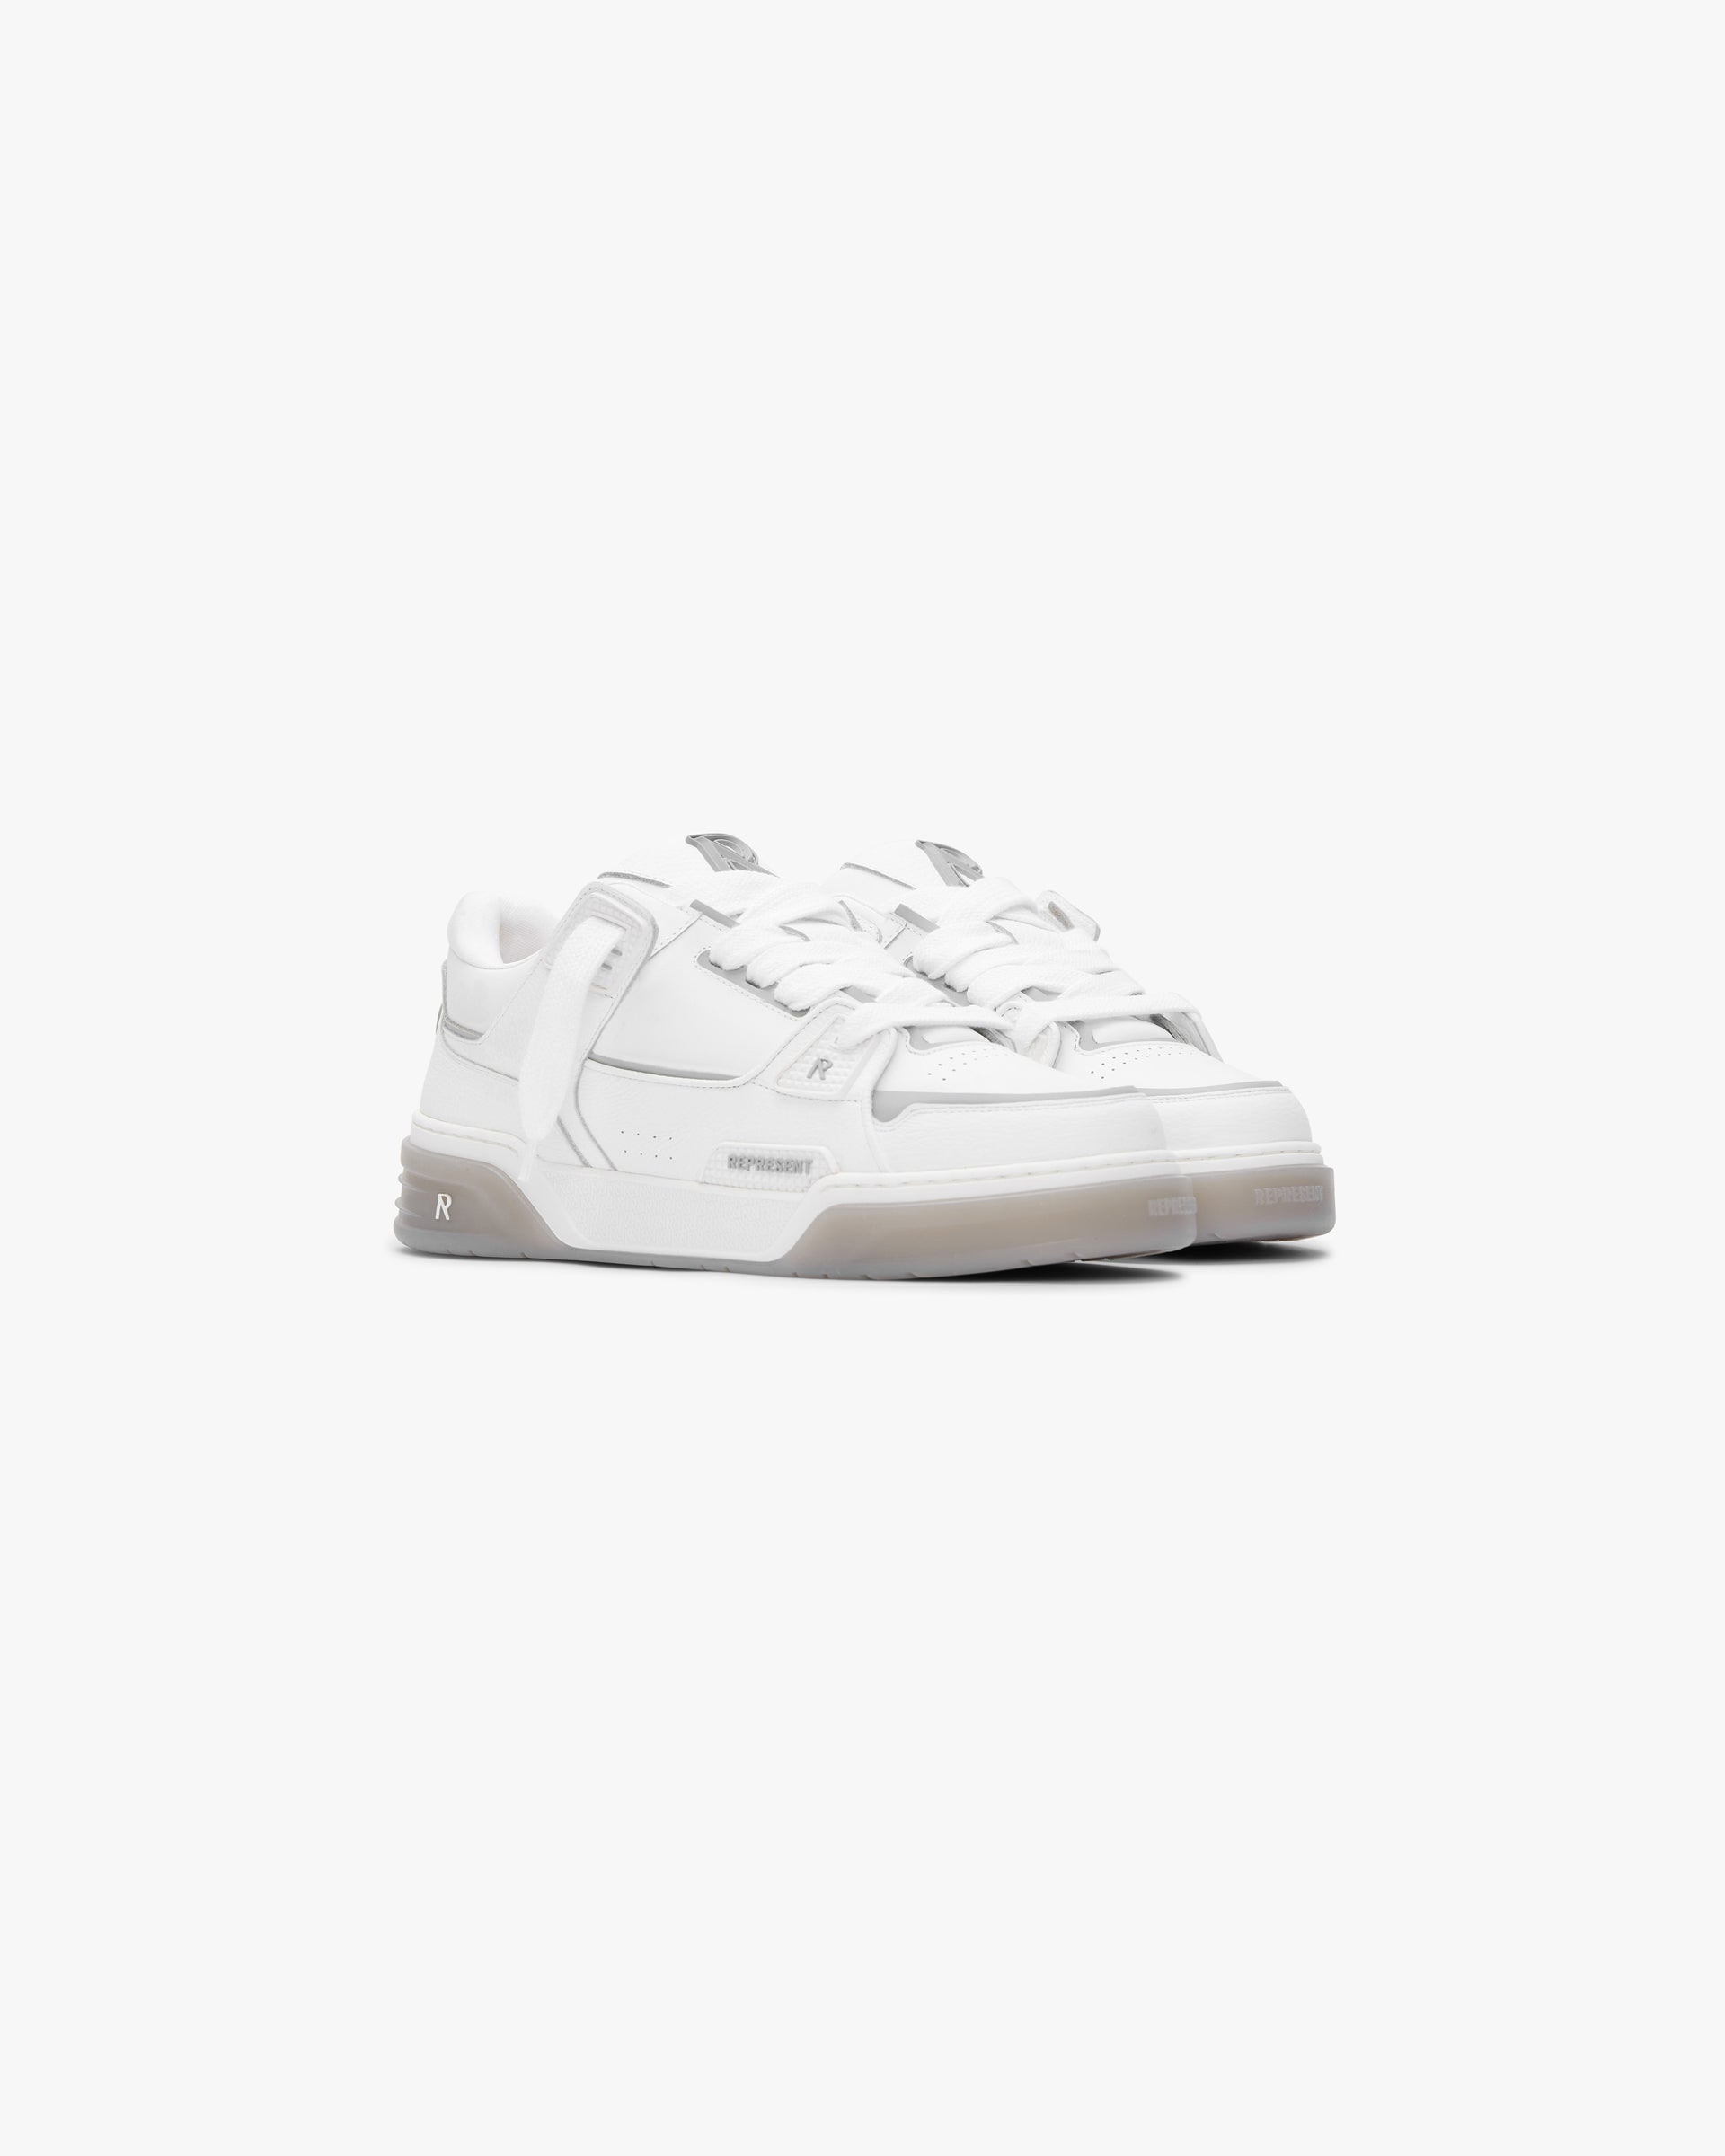 Represent Studio Sneaker White/Grey